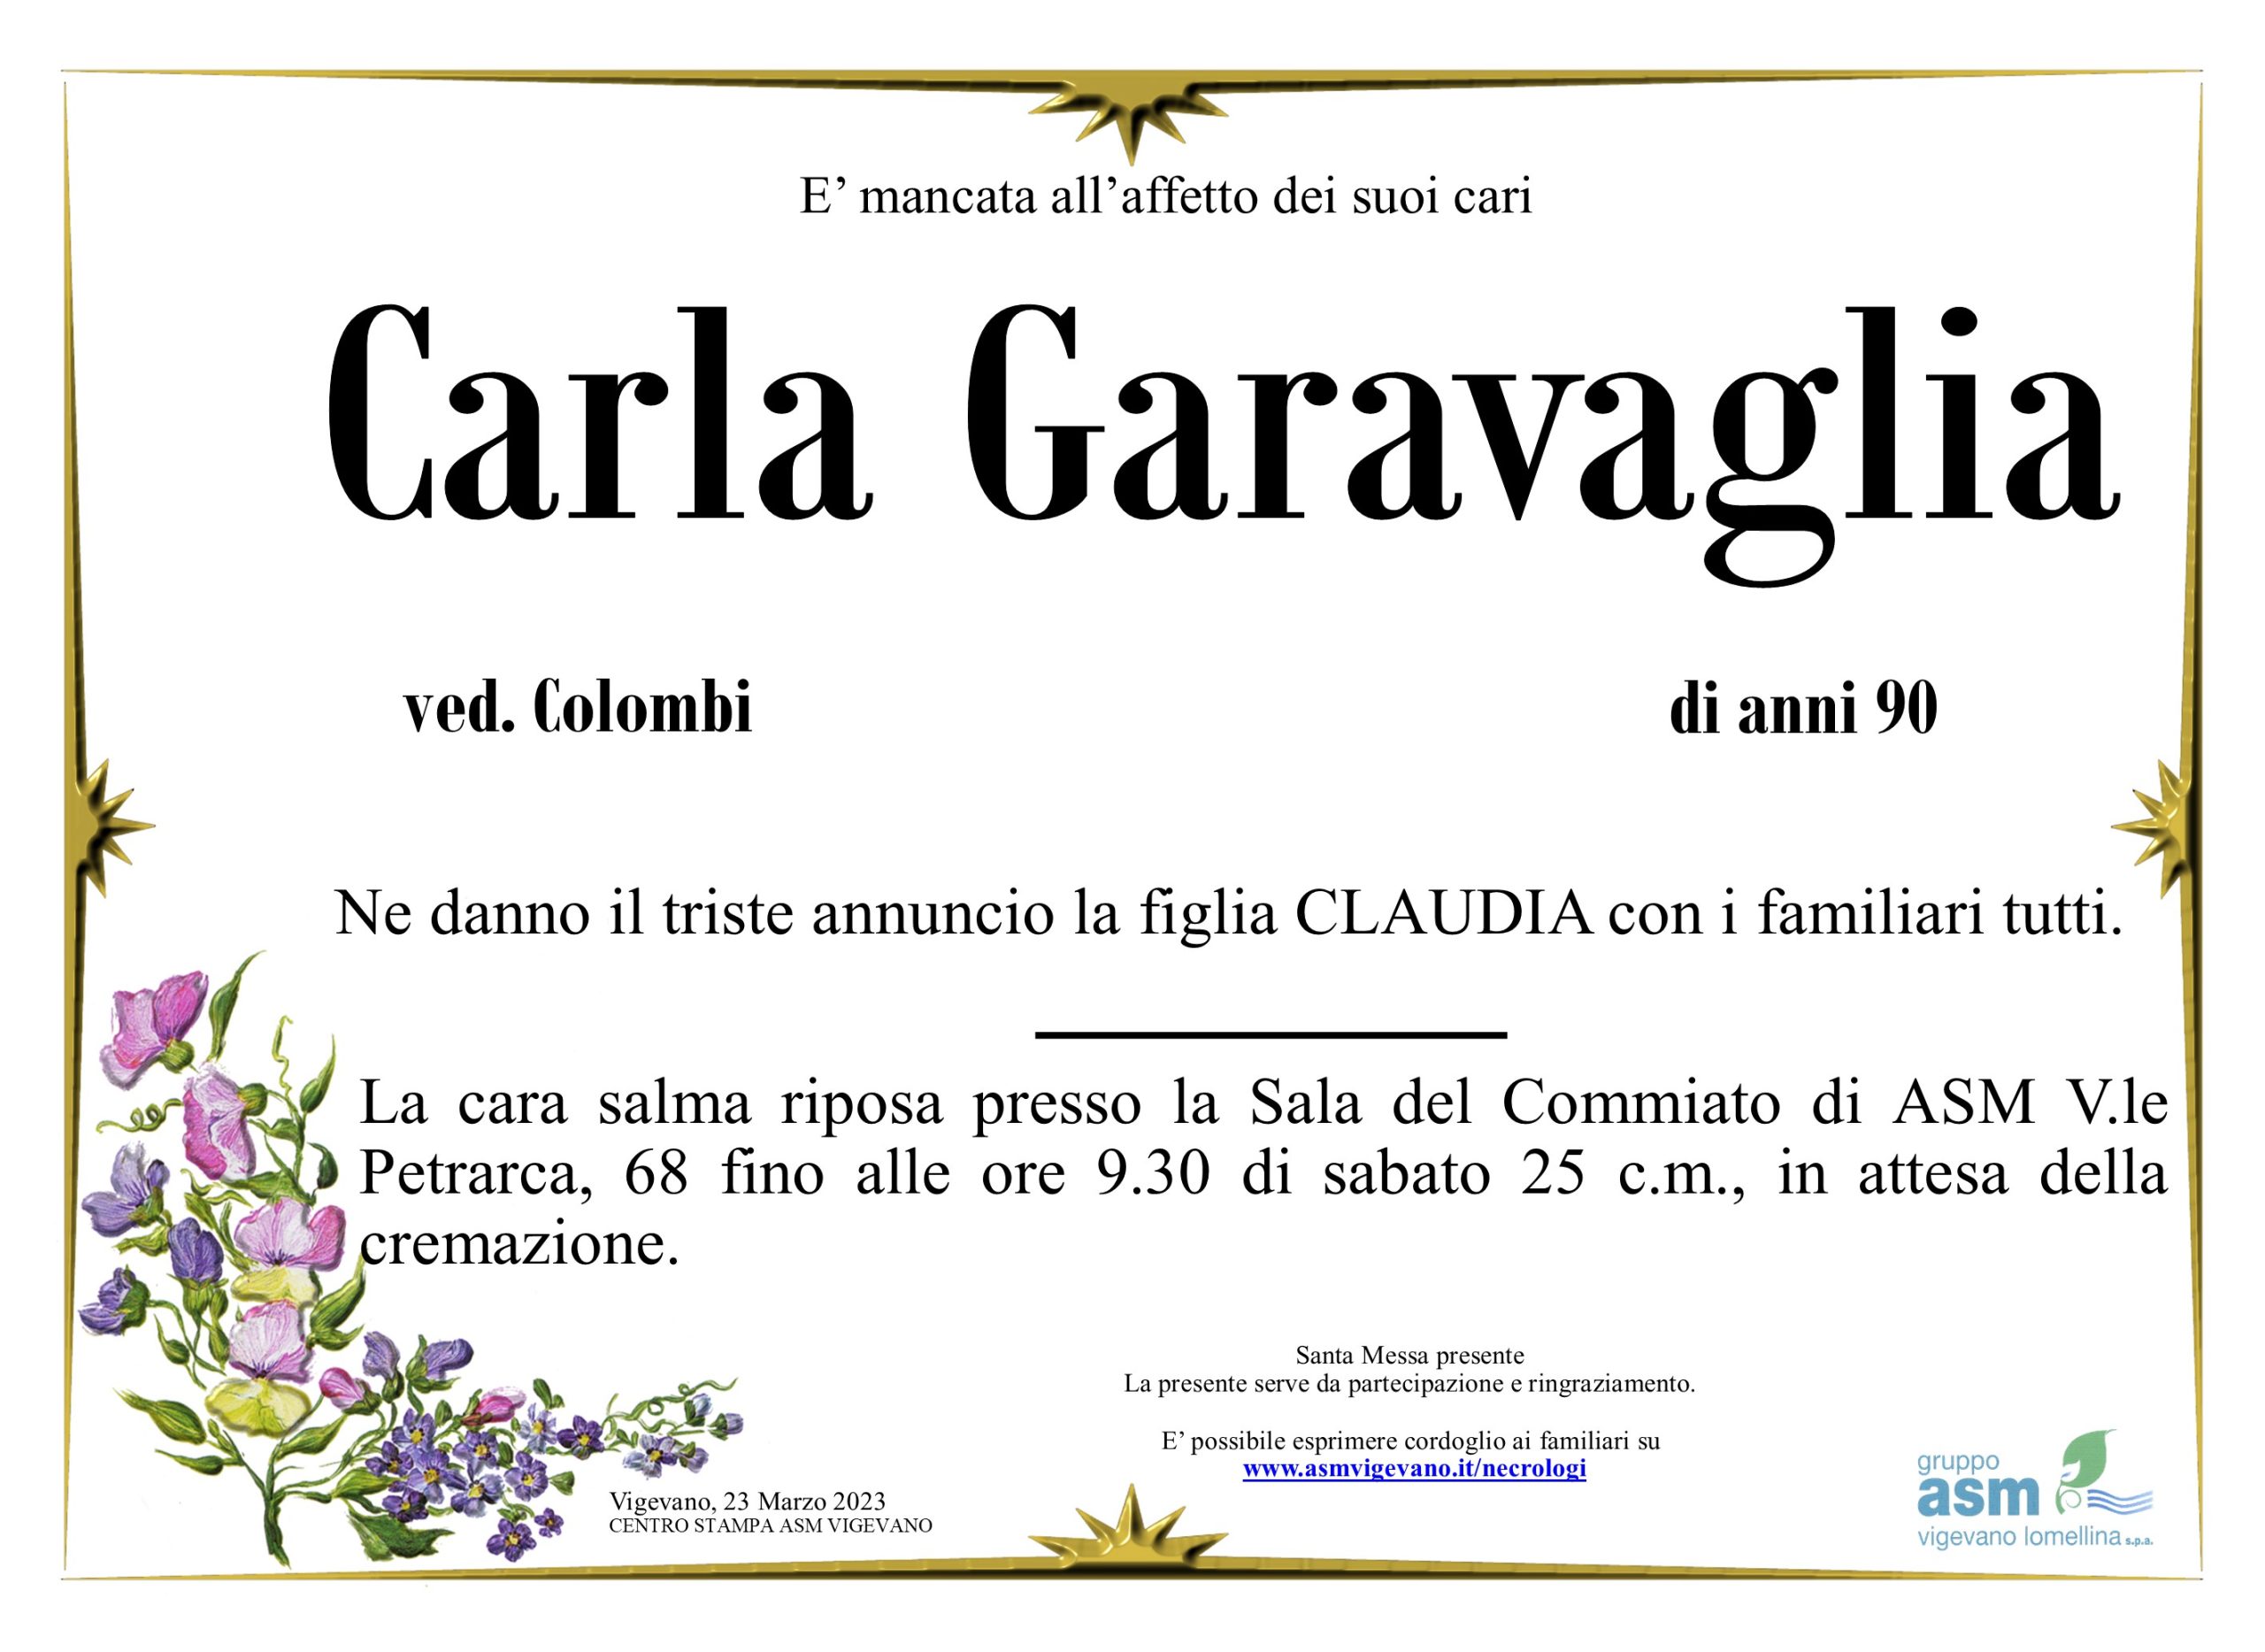 Carla Garavaglia